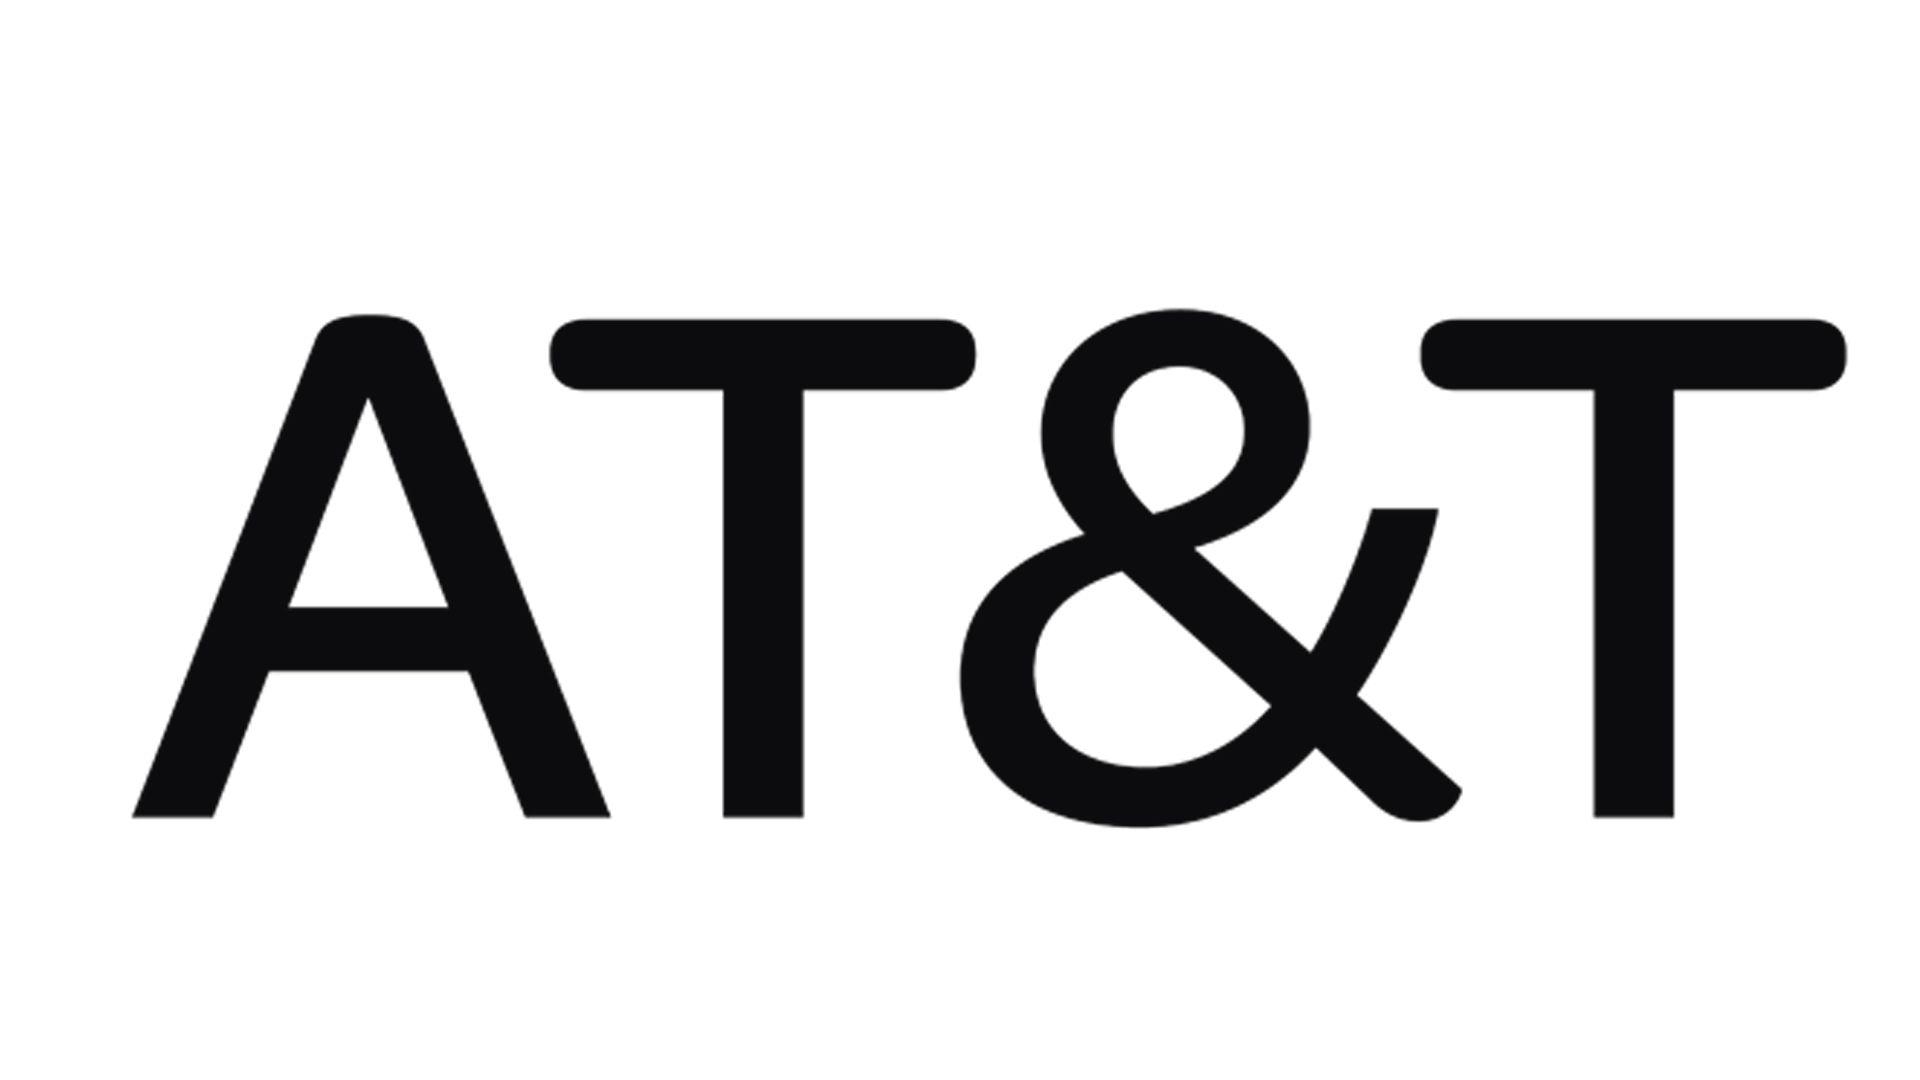 AT&T Company Logo - AT&T Logo, AT&T Symbol Meaning, History and Evolution